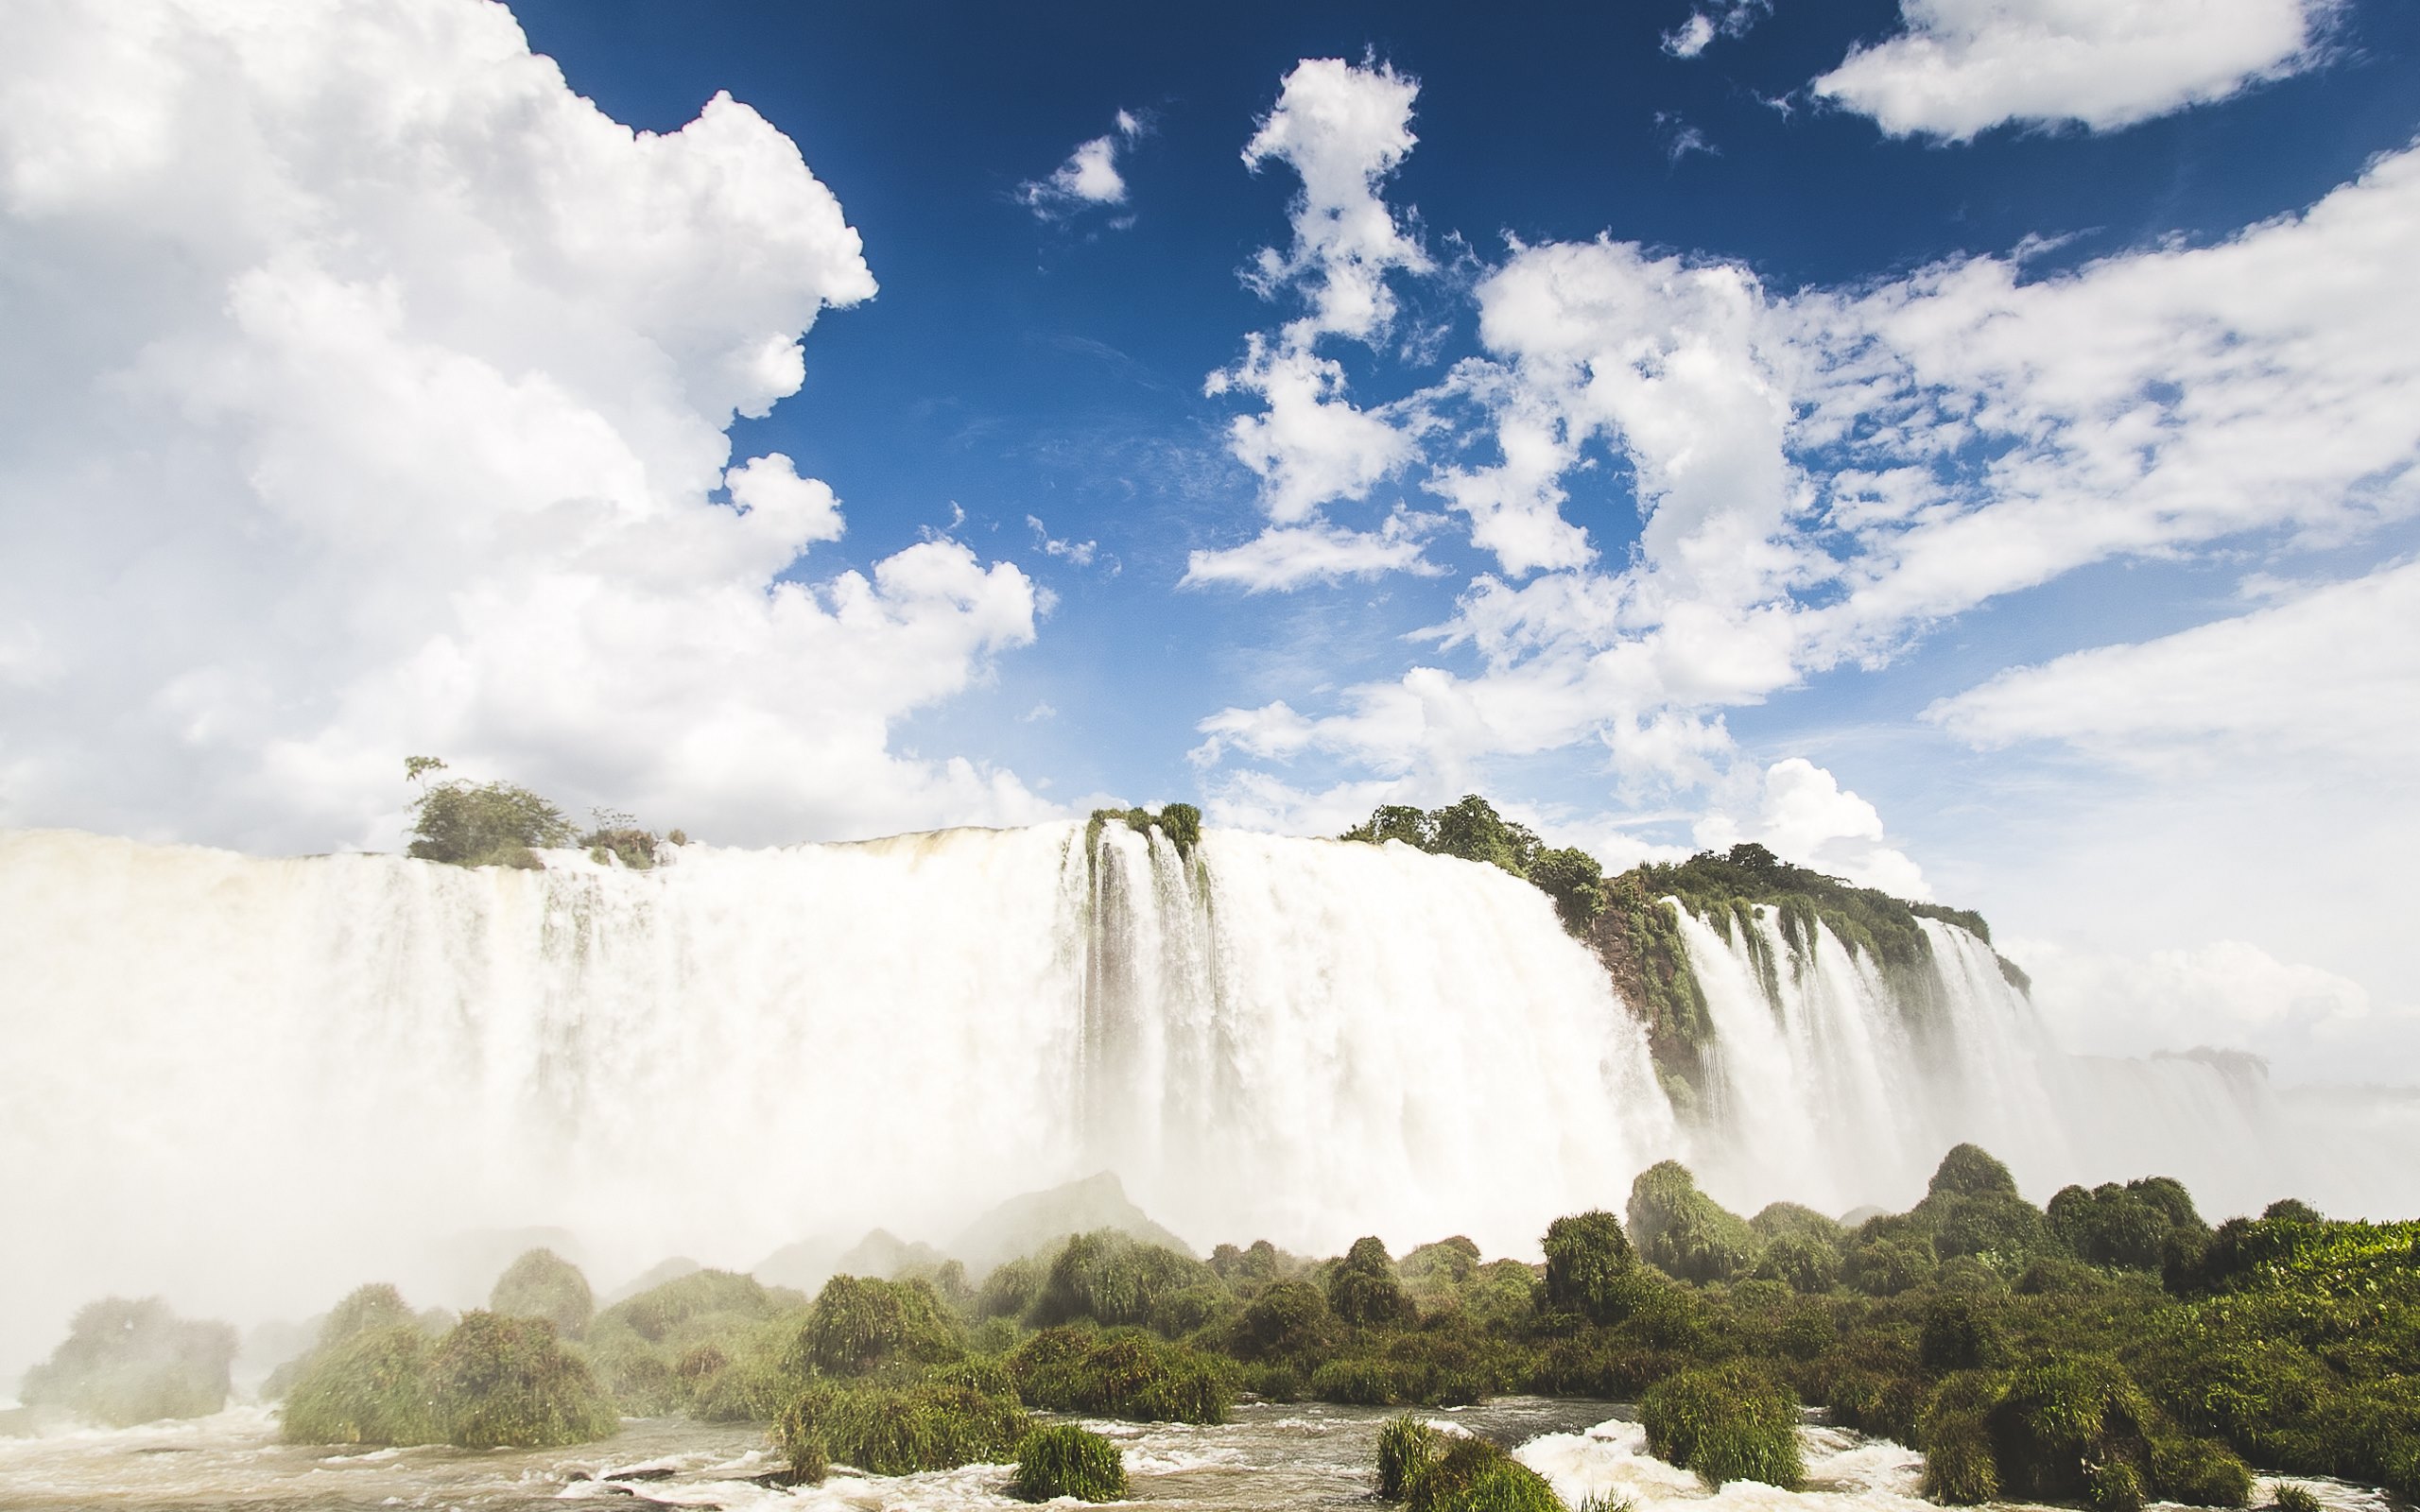 Iguazu Falls In South America by Luis Poletti